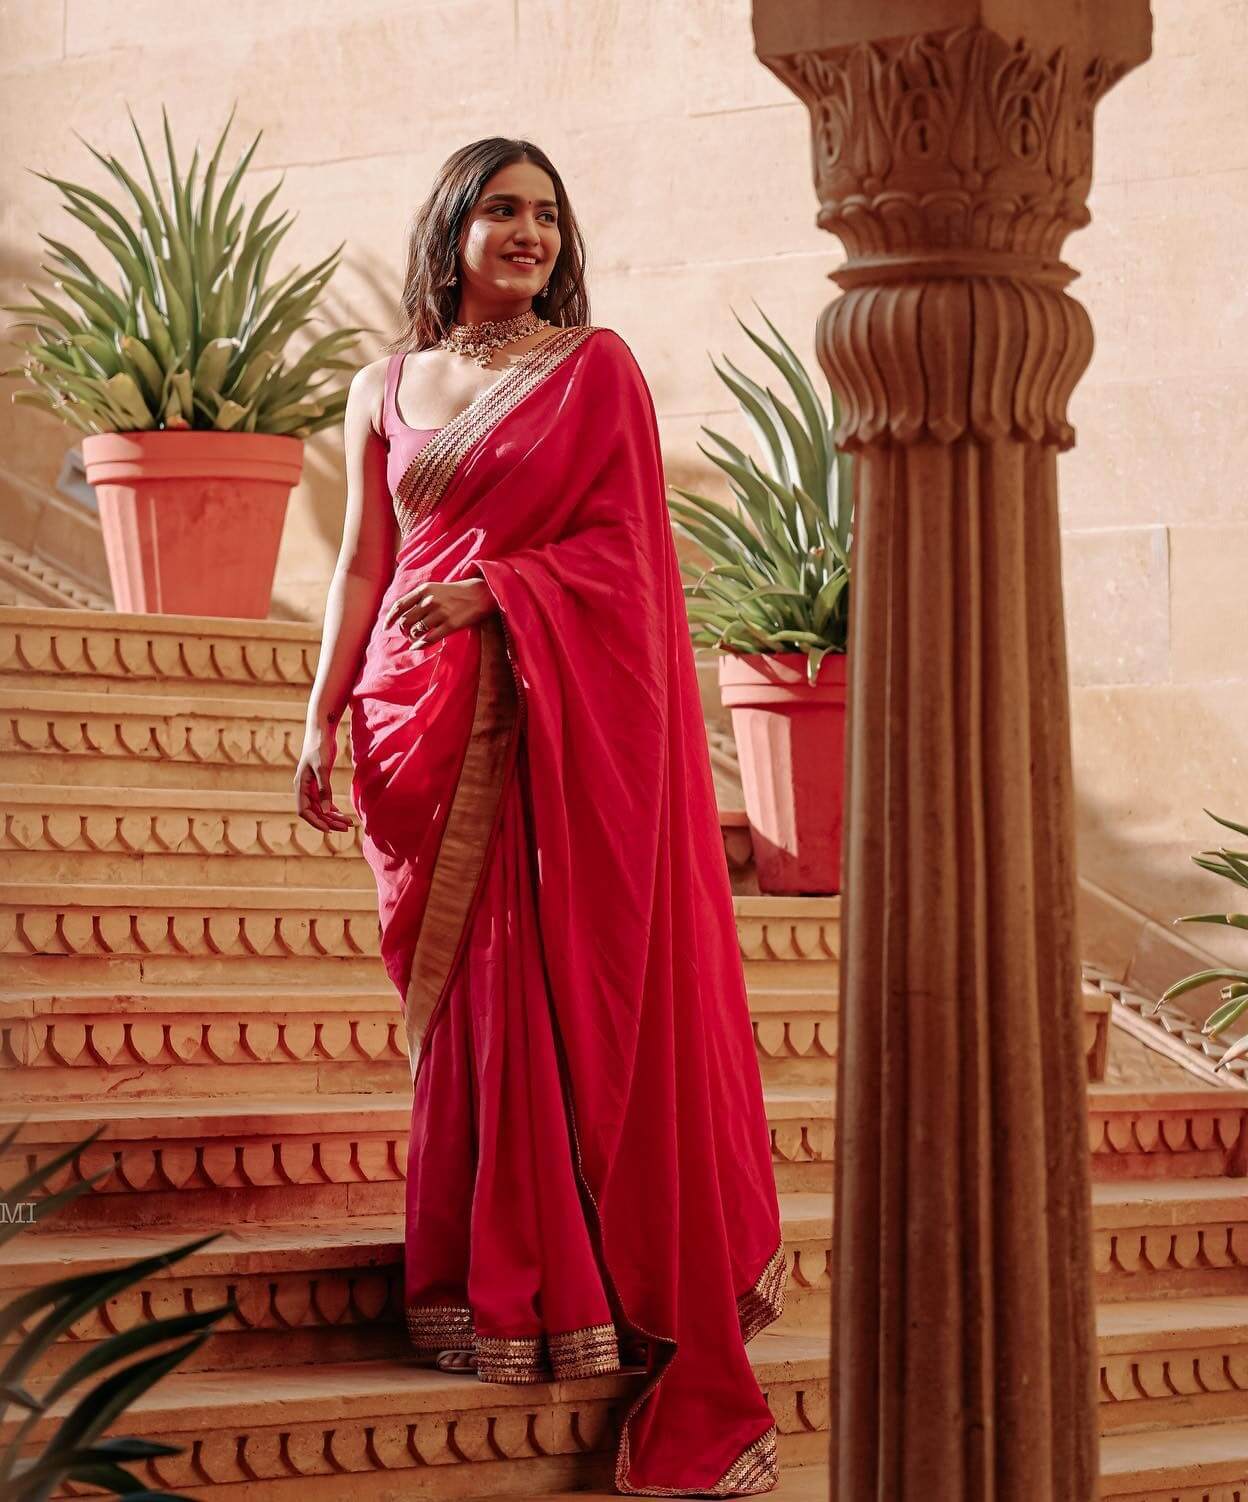 Saniya Iyappan Look Stunning In Red Saree With Sleeveless Blouse